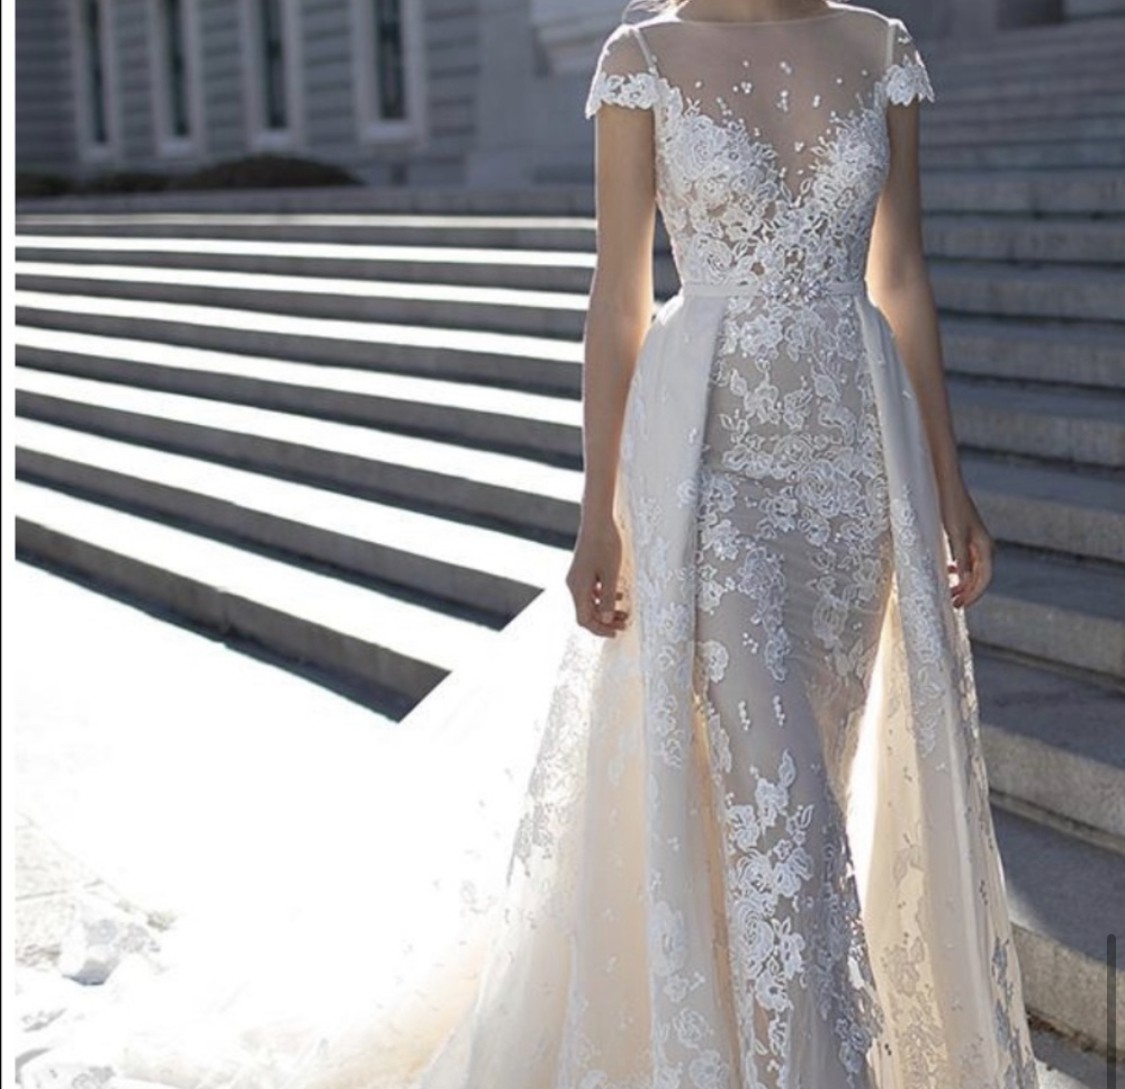 Berta Bridal 16-08 Sample Wedding Dress Save 86% - Stillwhite